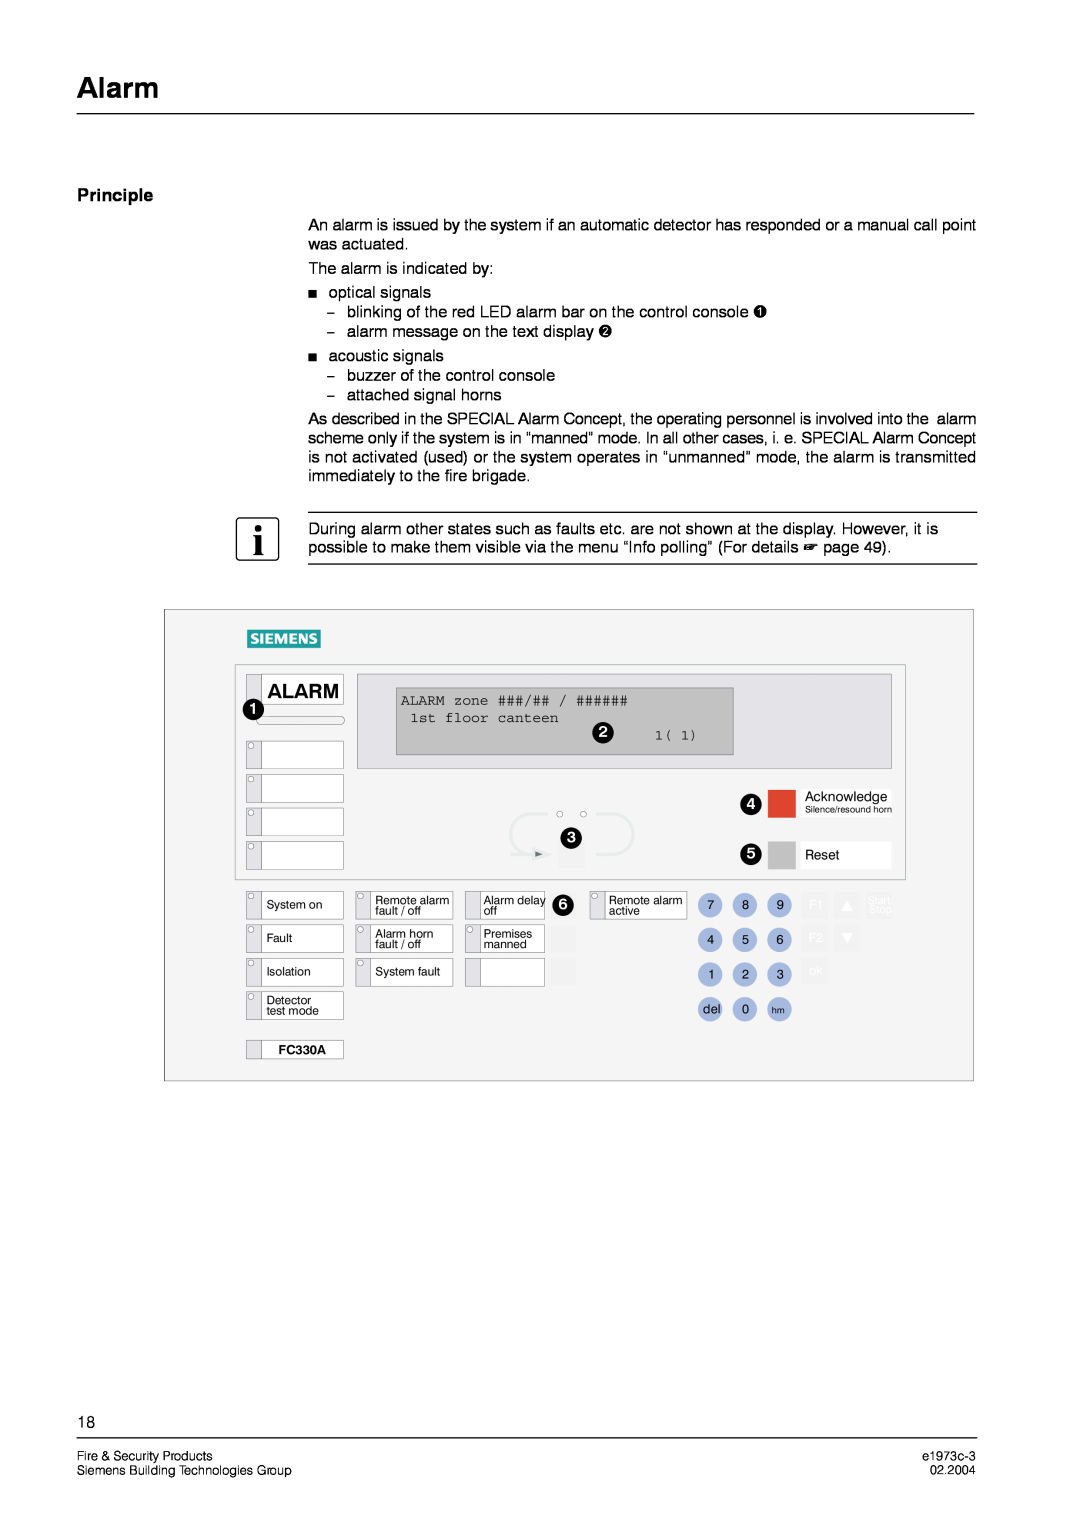 Siemens FC330A manual Alarm, Principle 